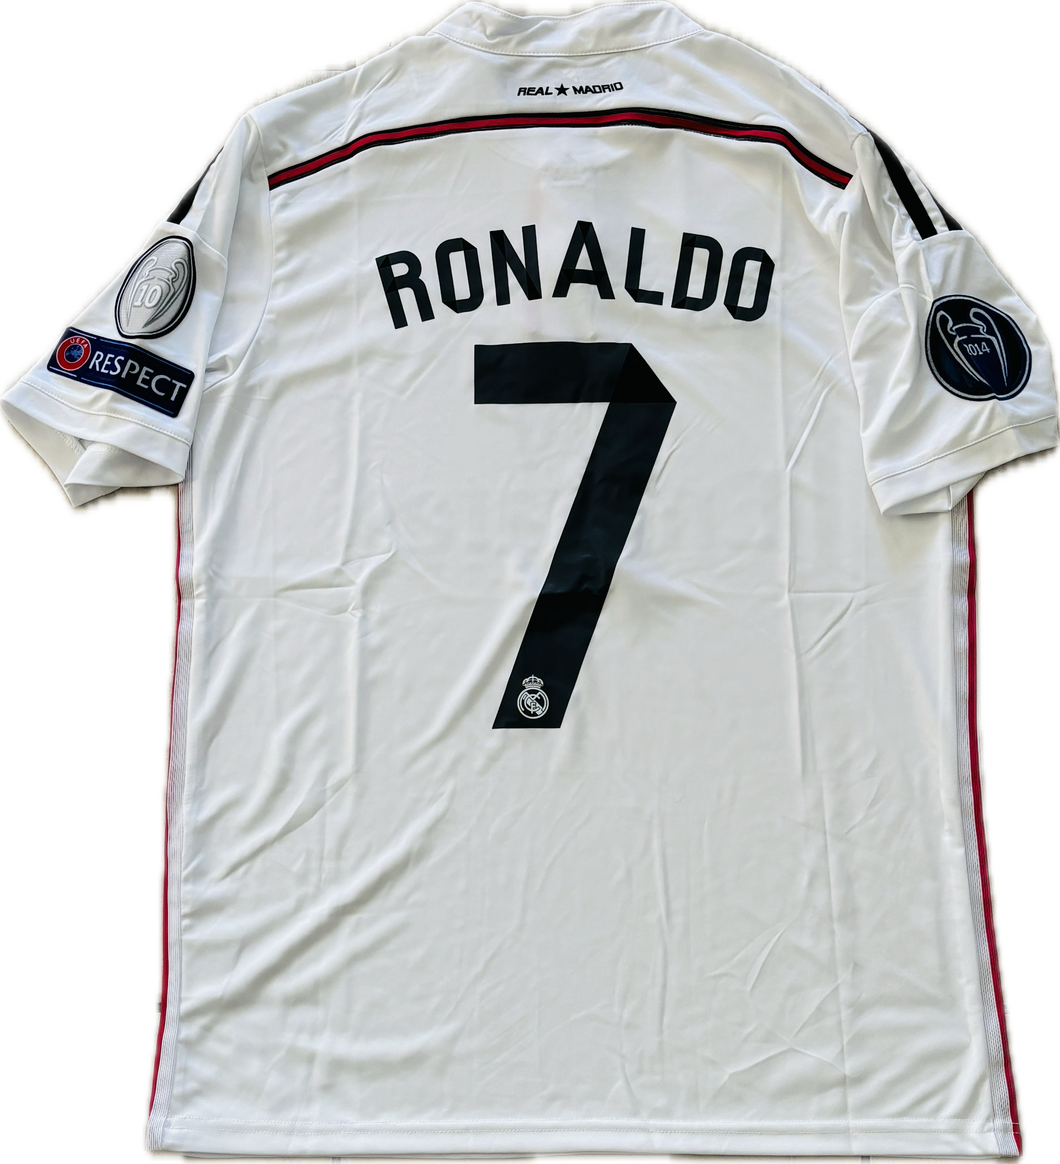 Cristiano Ronaldo 2014 2015 Real Madrid Adidas White la decima 10 UCL champions league jersey